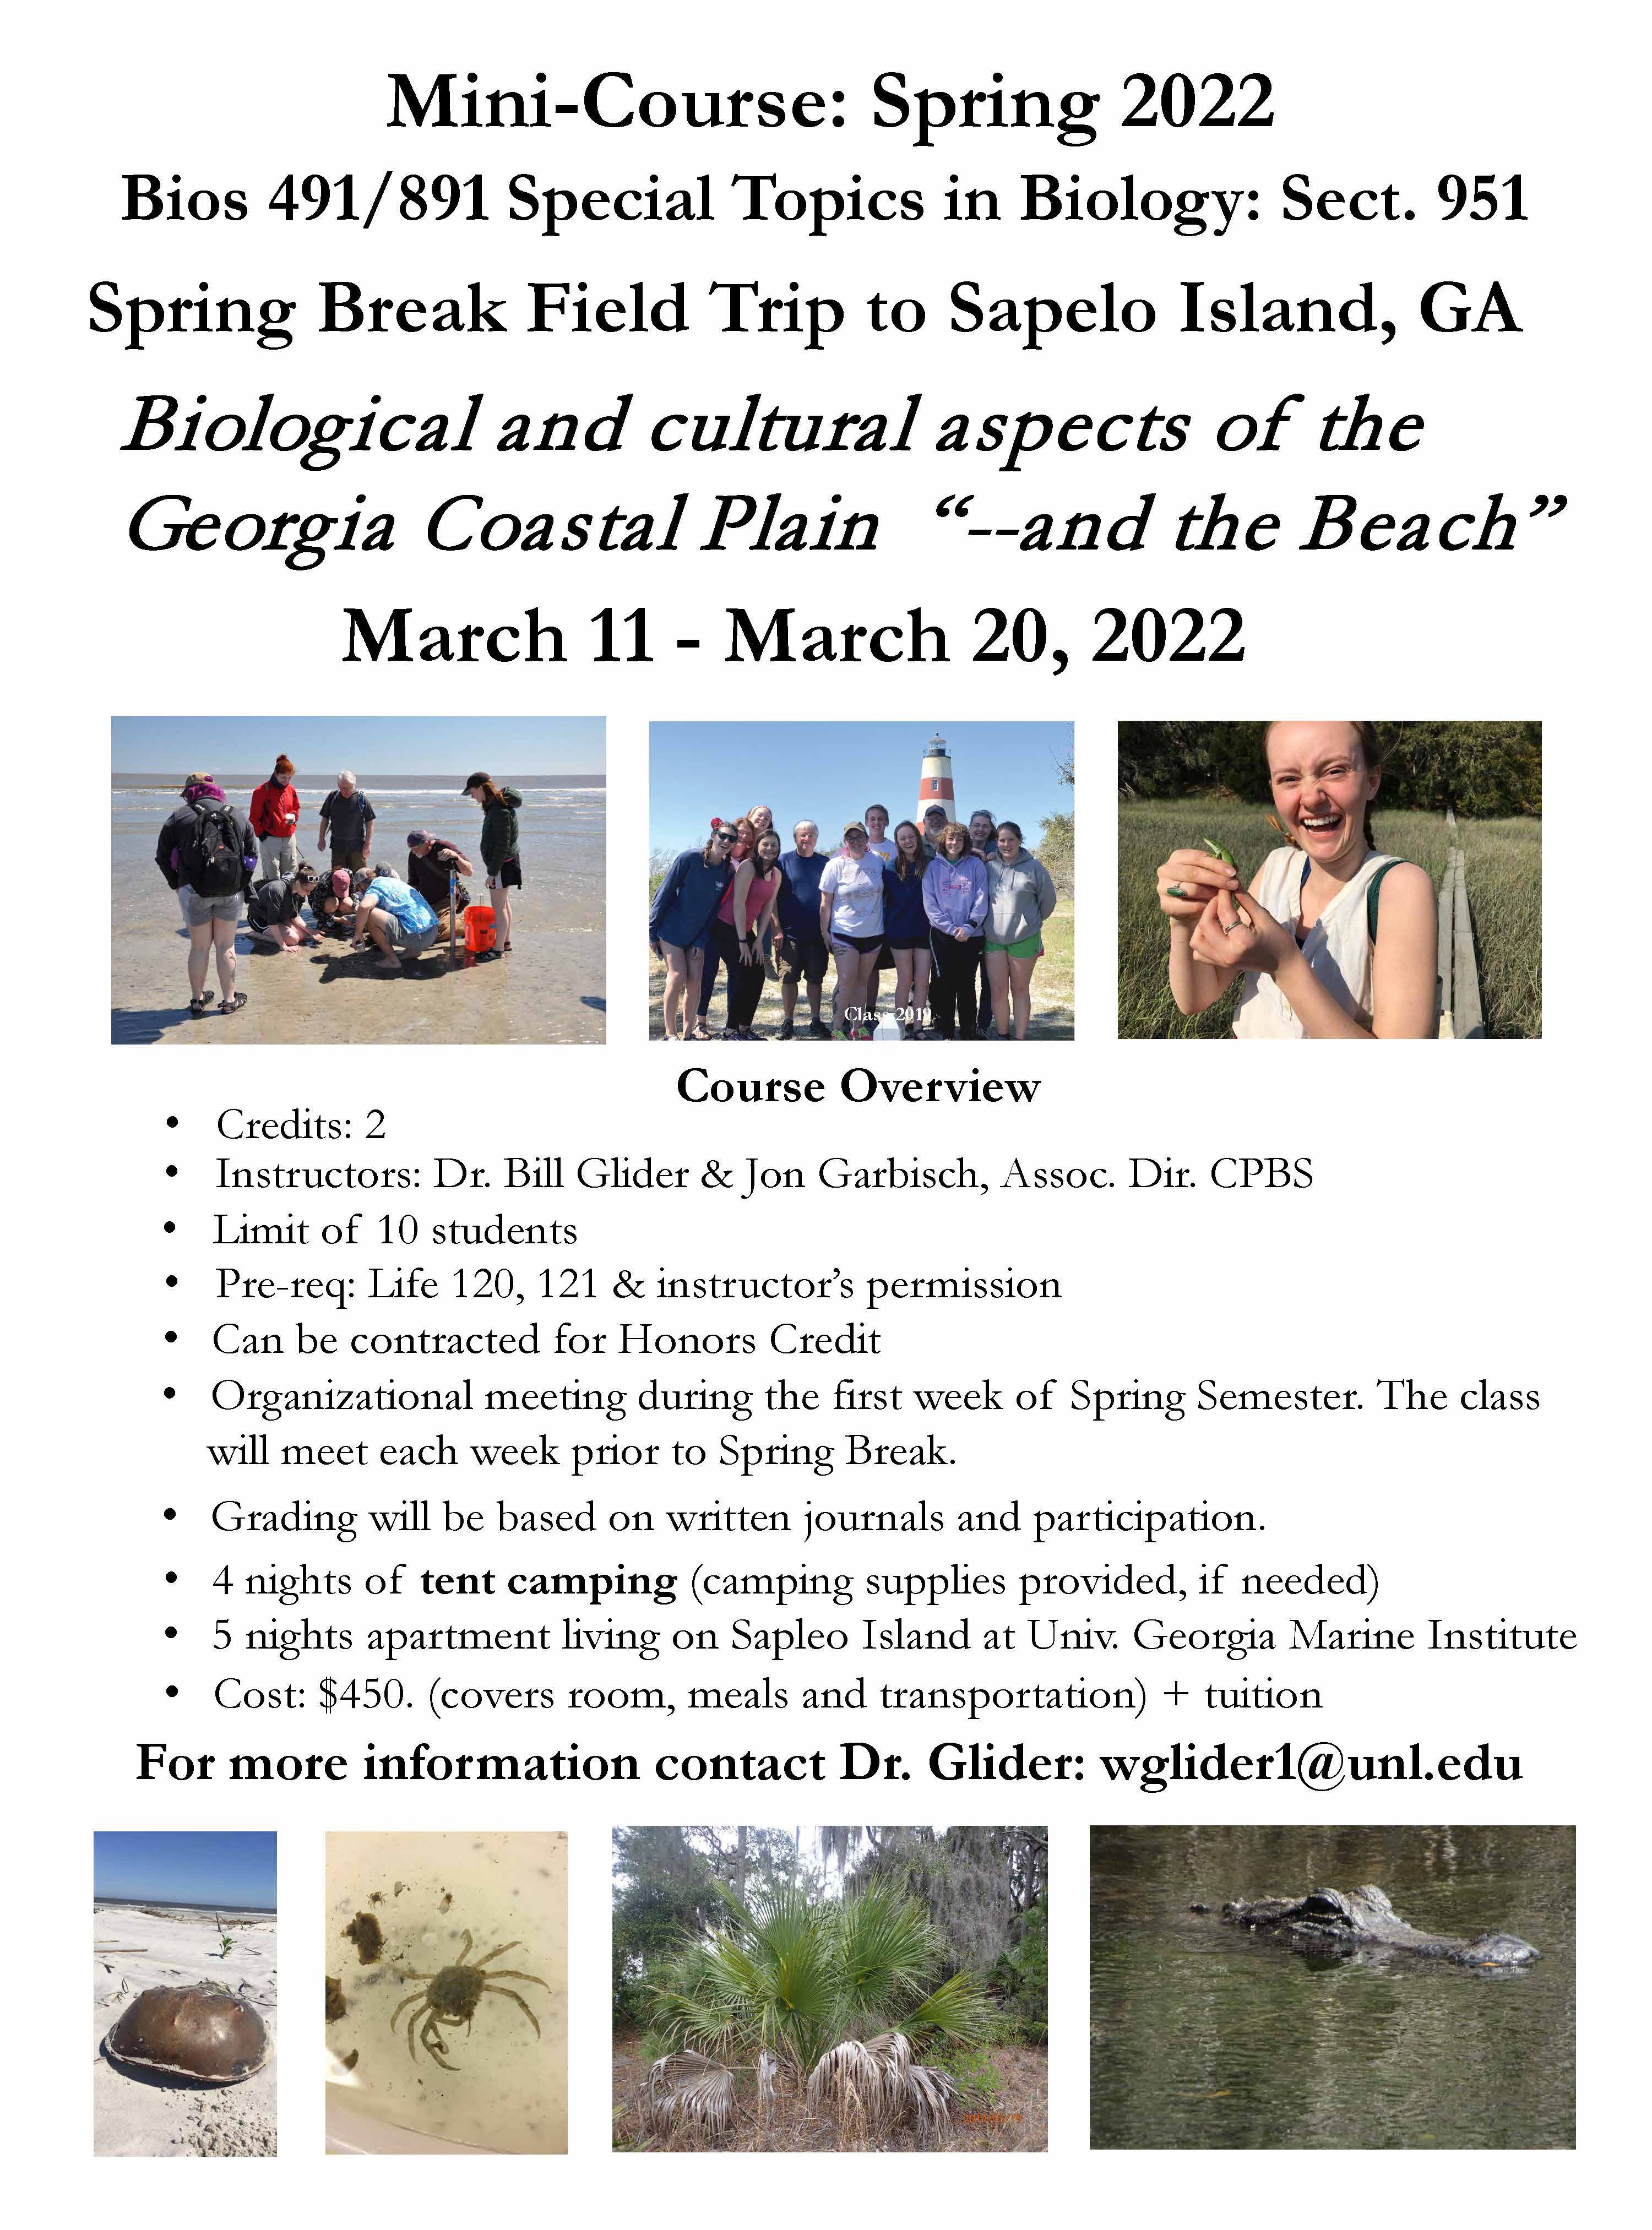 spring-break-field-trip-to-sapelo-island-ga-mini-course-announce-university-of-nebraska-lincoln